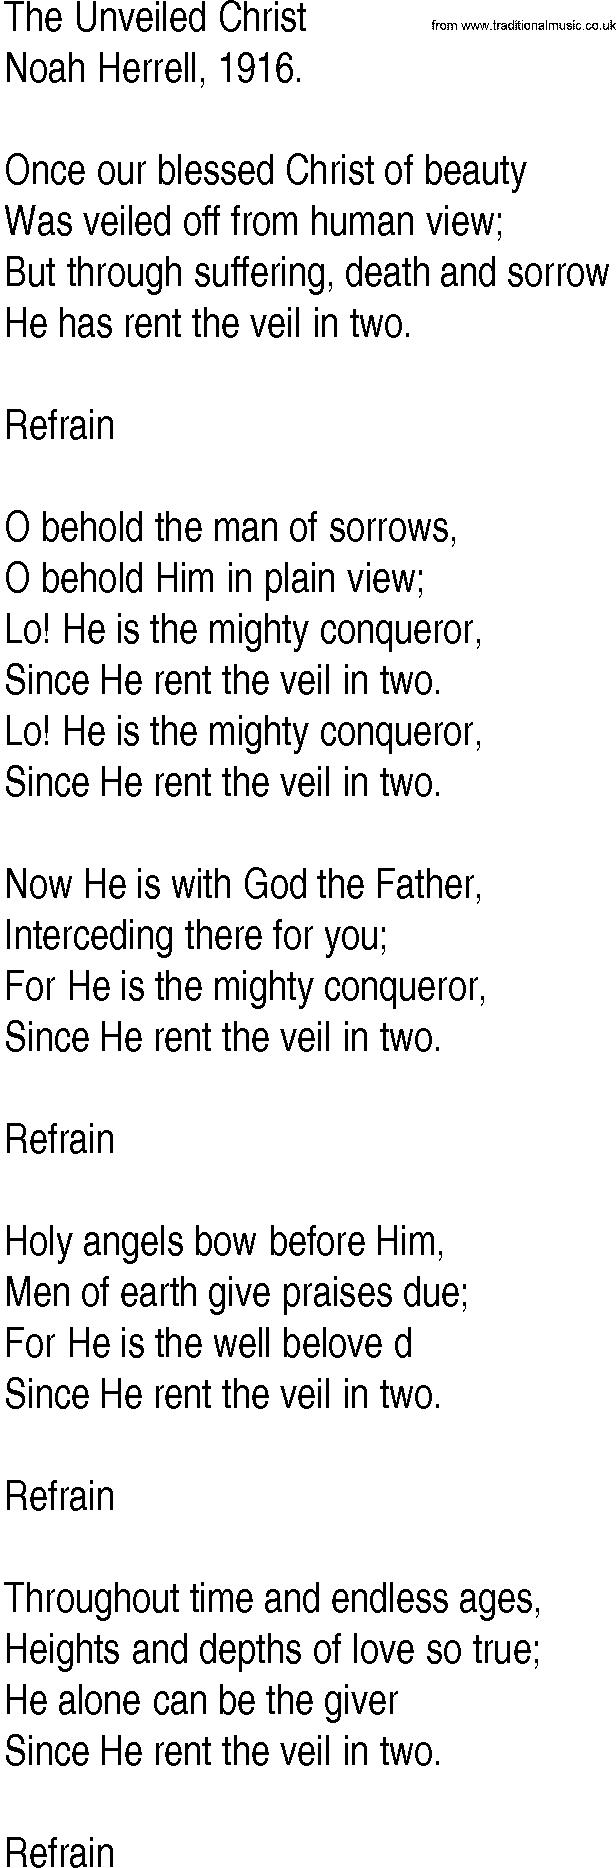 Hymn and Gospel Song: The Unveiled Christ by Noah Herrell lyrics